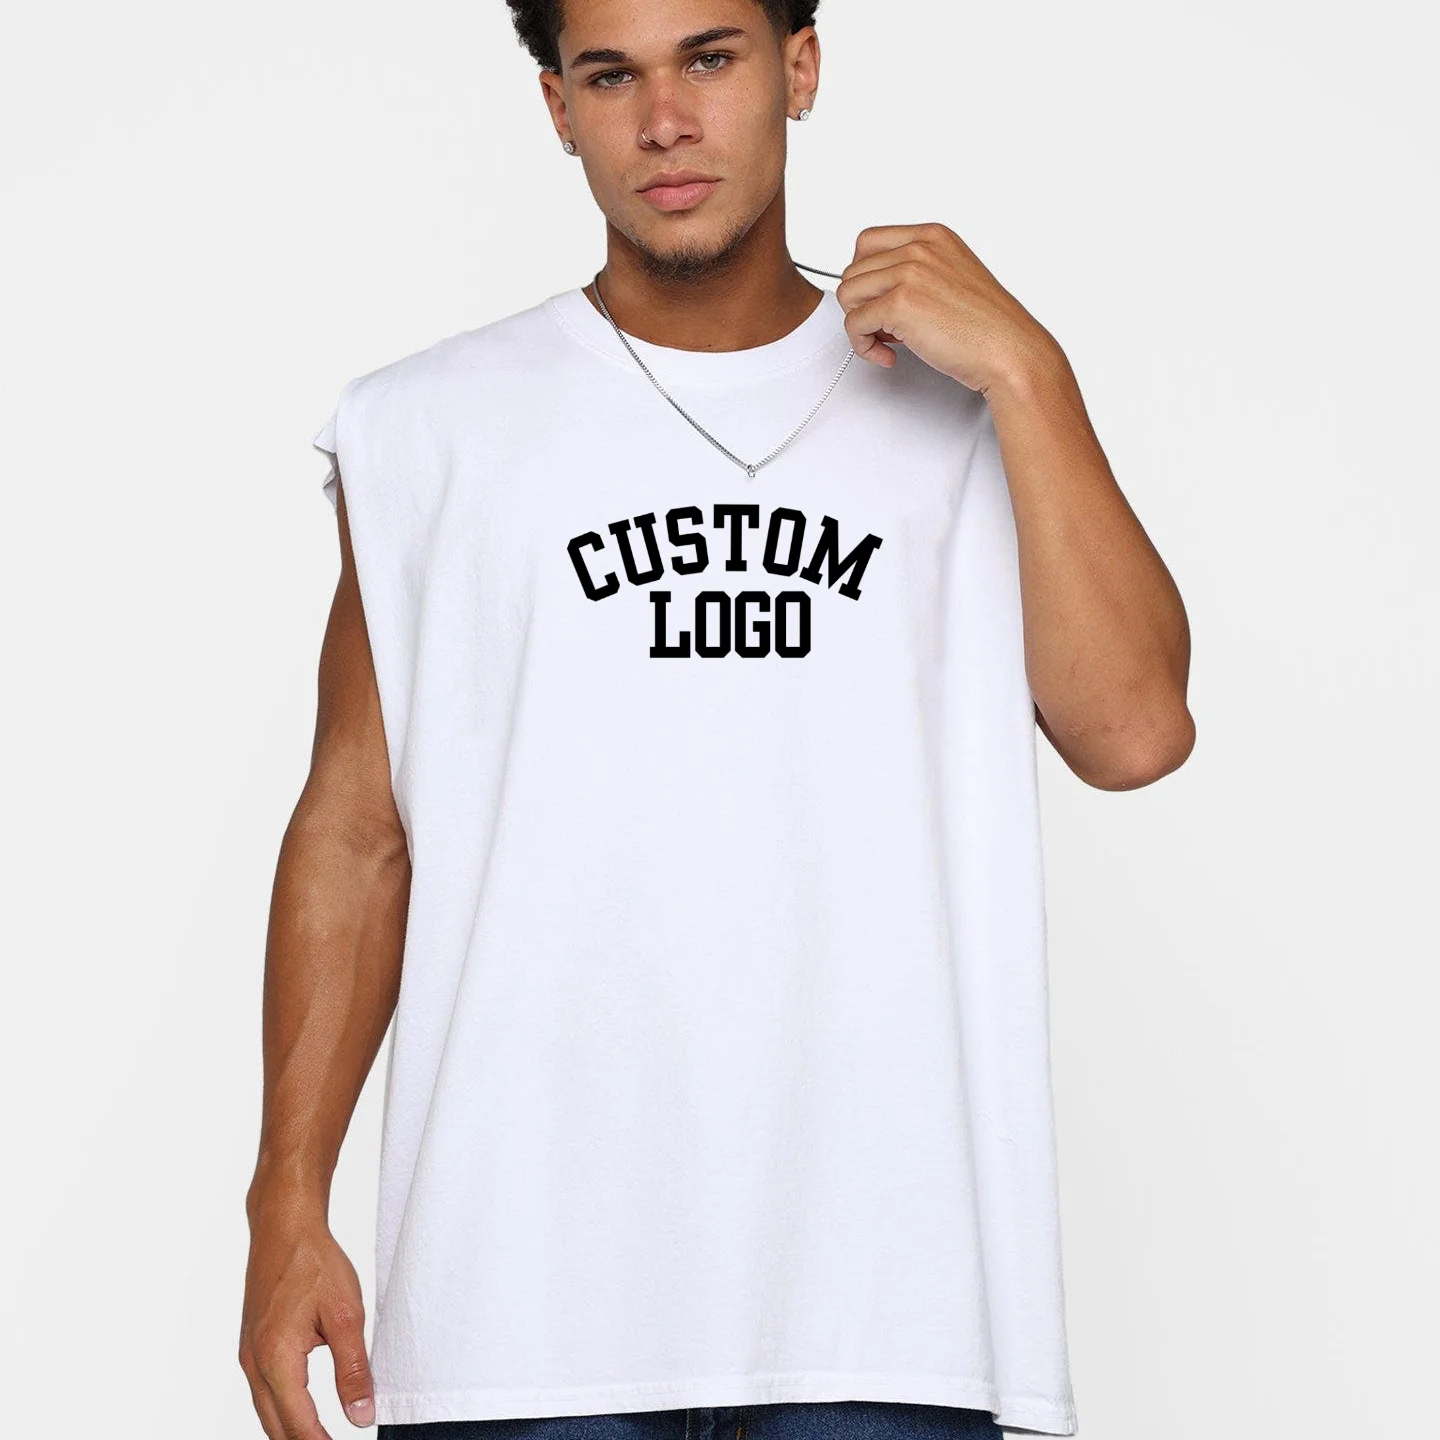 Factory Custom Men Muscle Sleeveless T-Shirt 100% cotton Hollow Tank Tops crew neck puff print Tee shirts for High quality